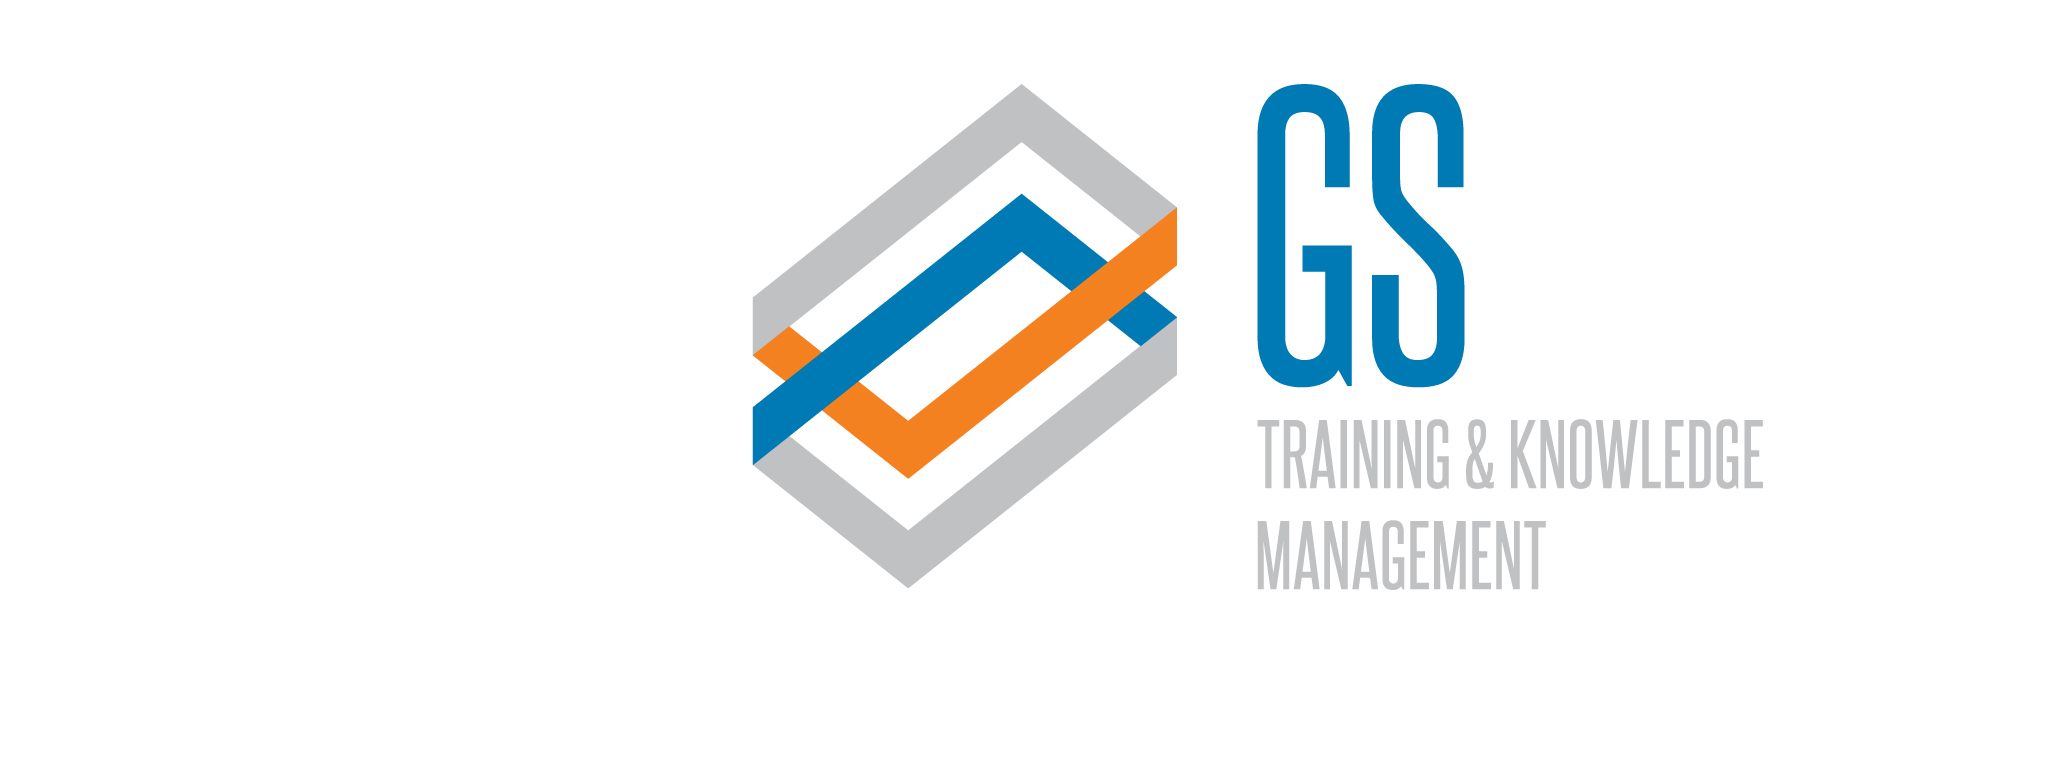 GS Training & Knowledge Management